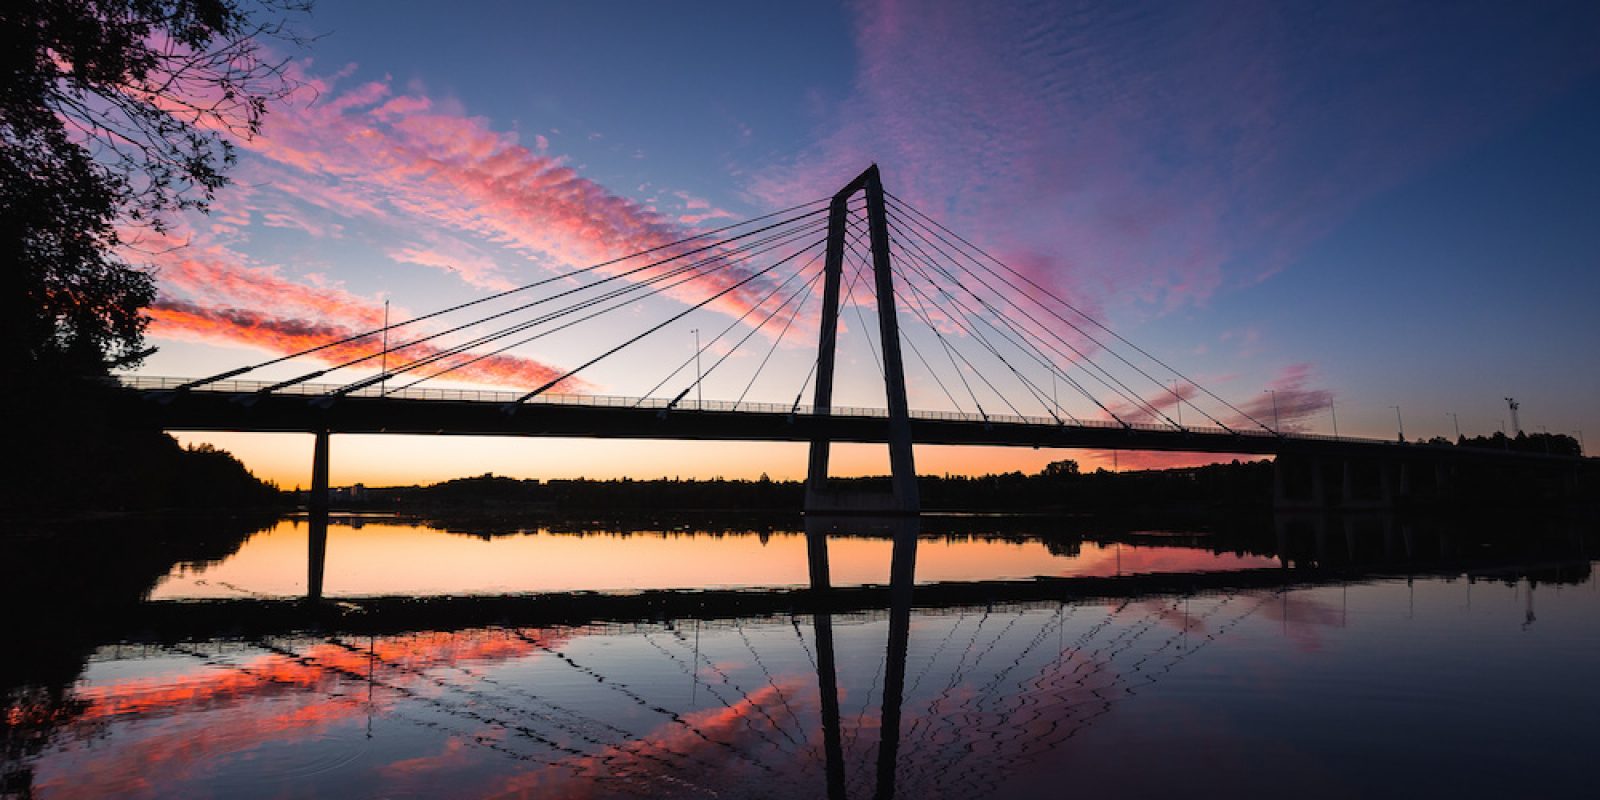 The bridge in pink sunset